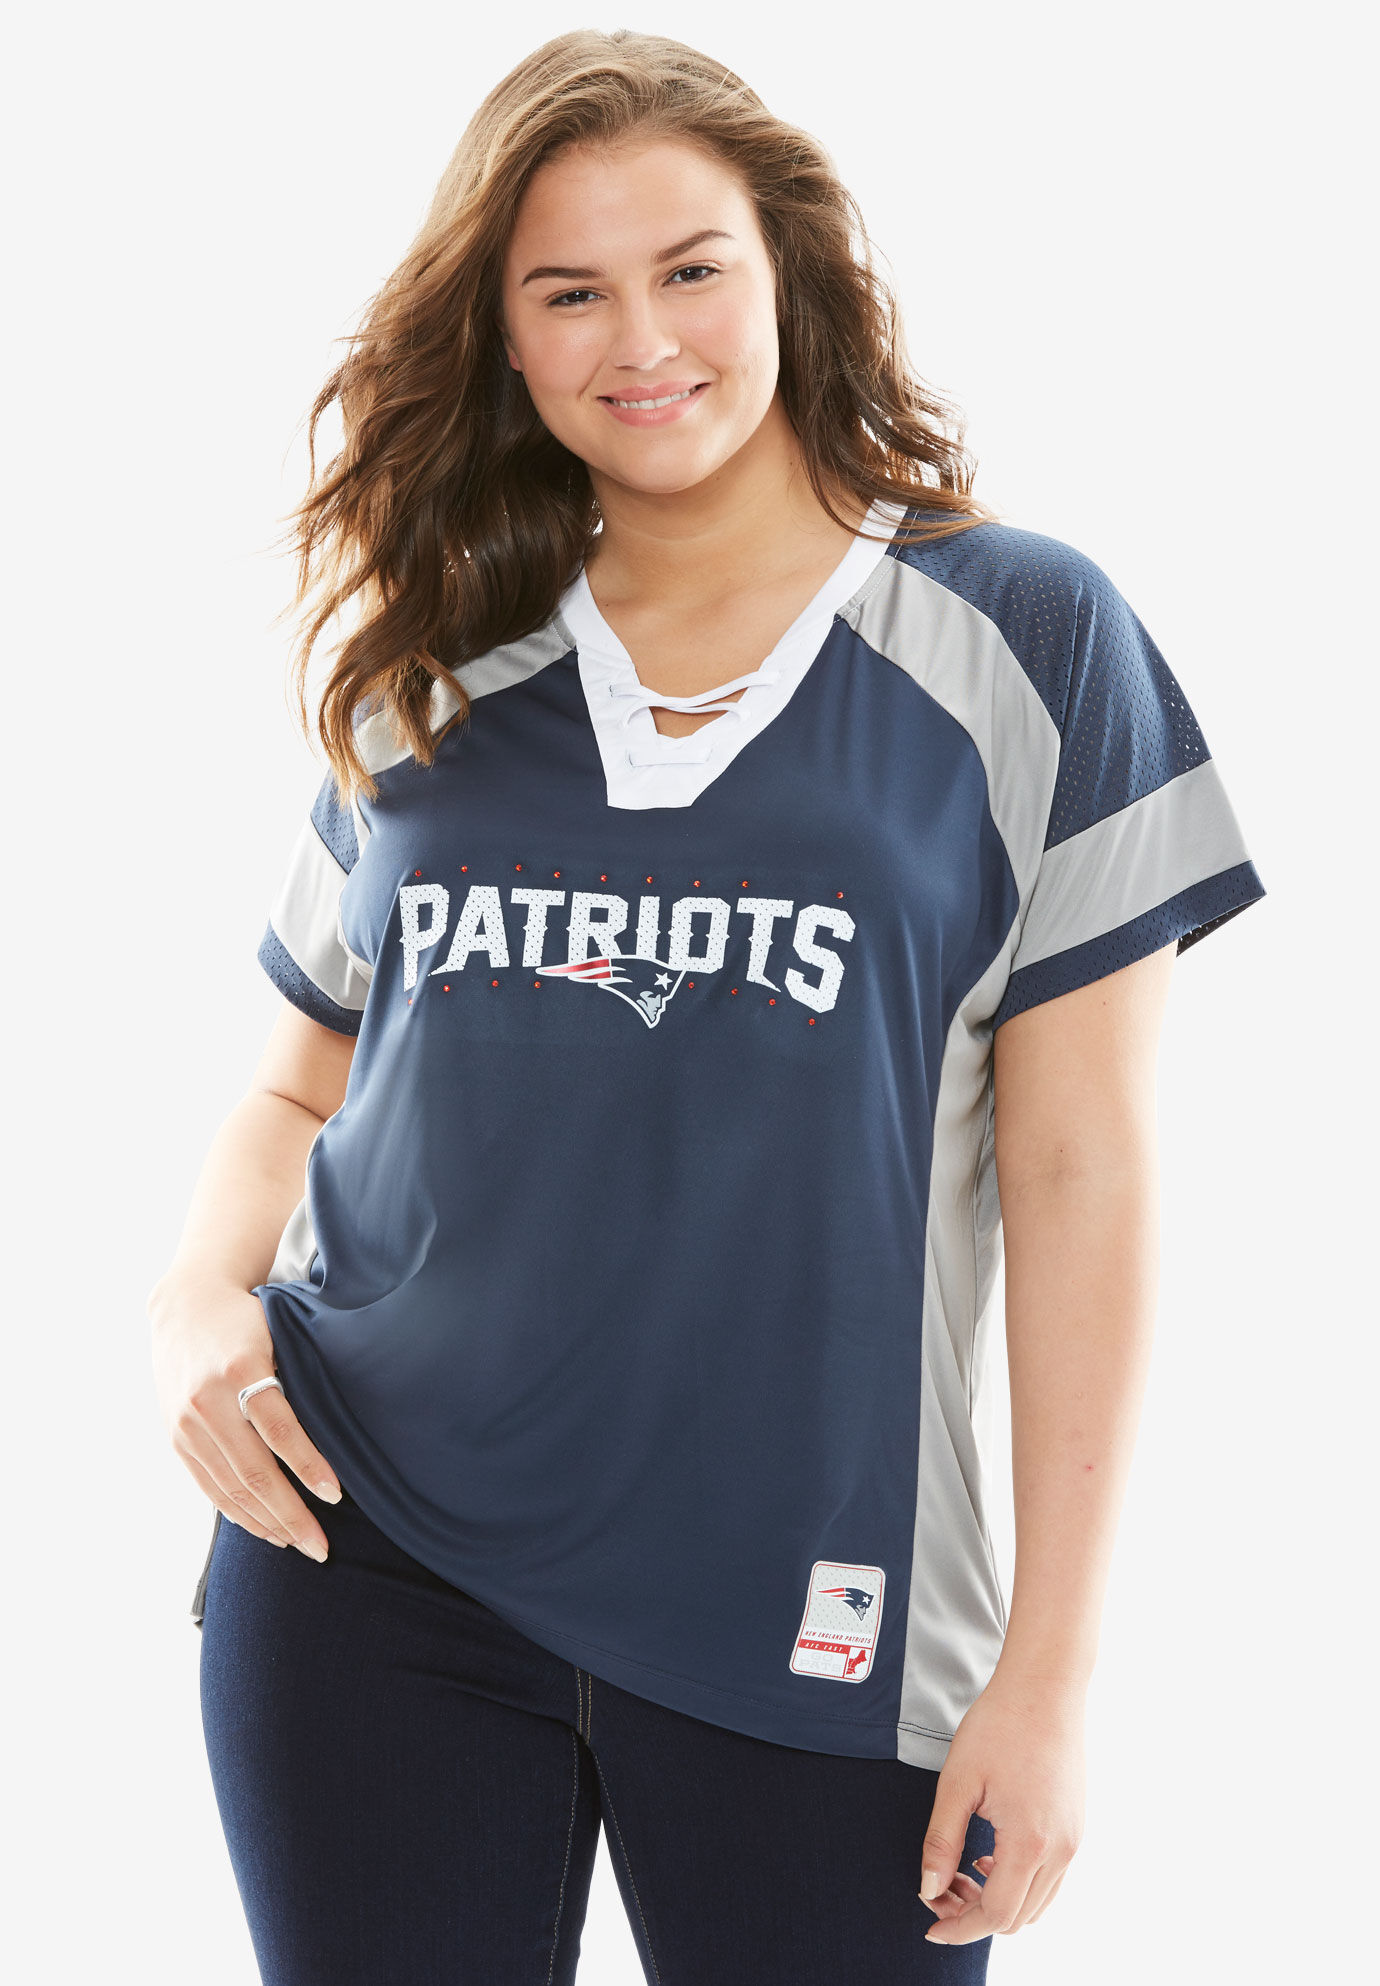 مرطب Plus Size NFL Jerseys & Apparel for Women | Woman Within مرطب